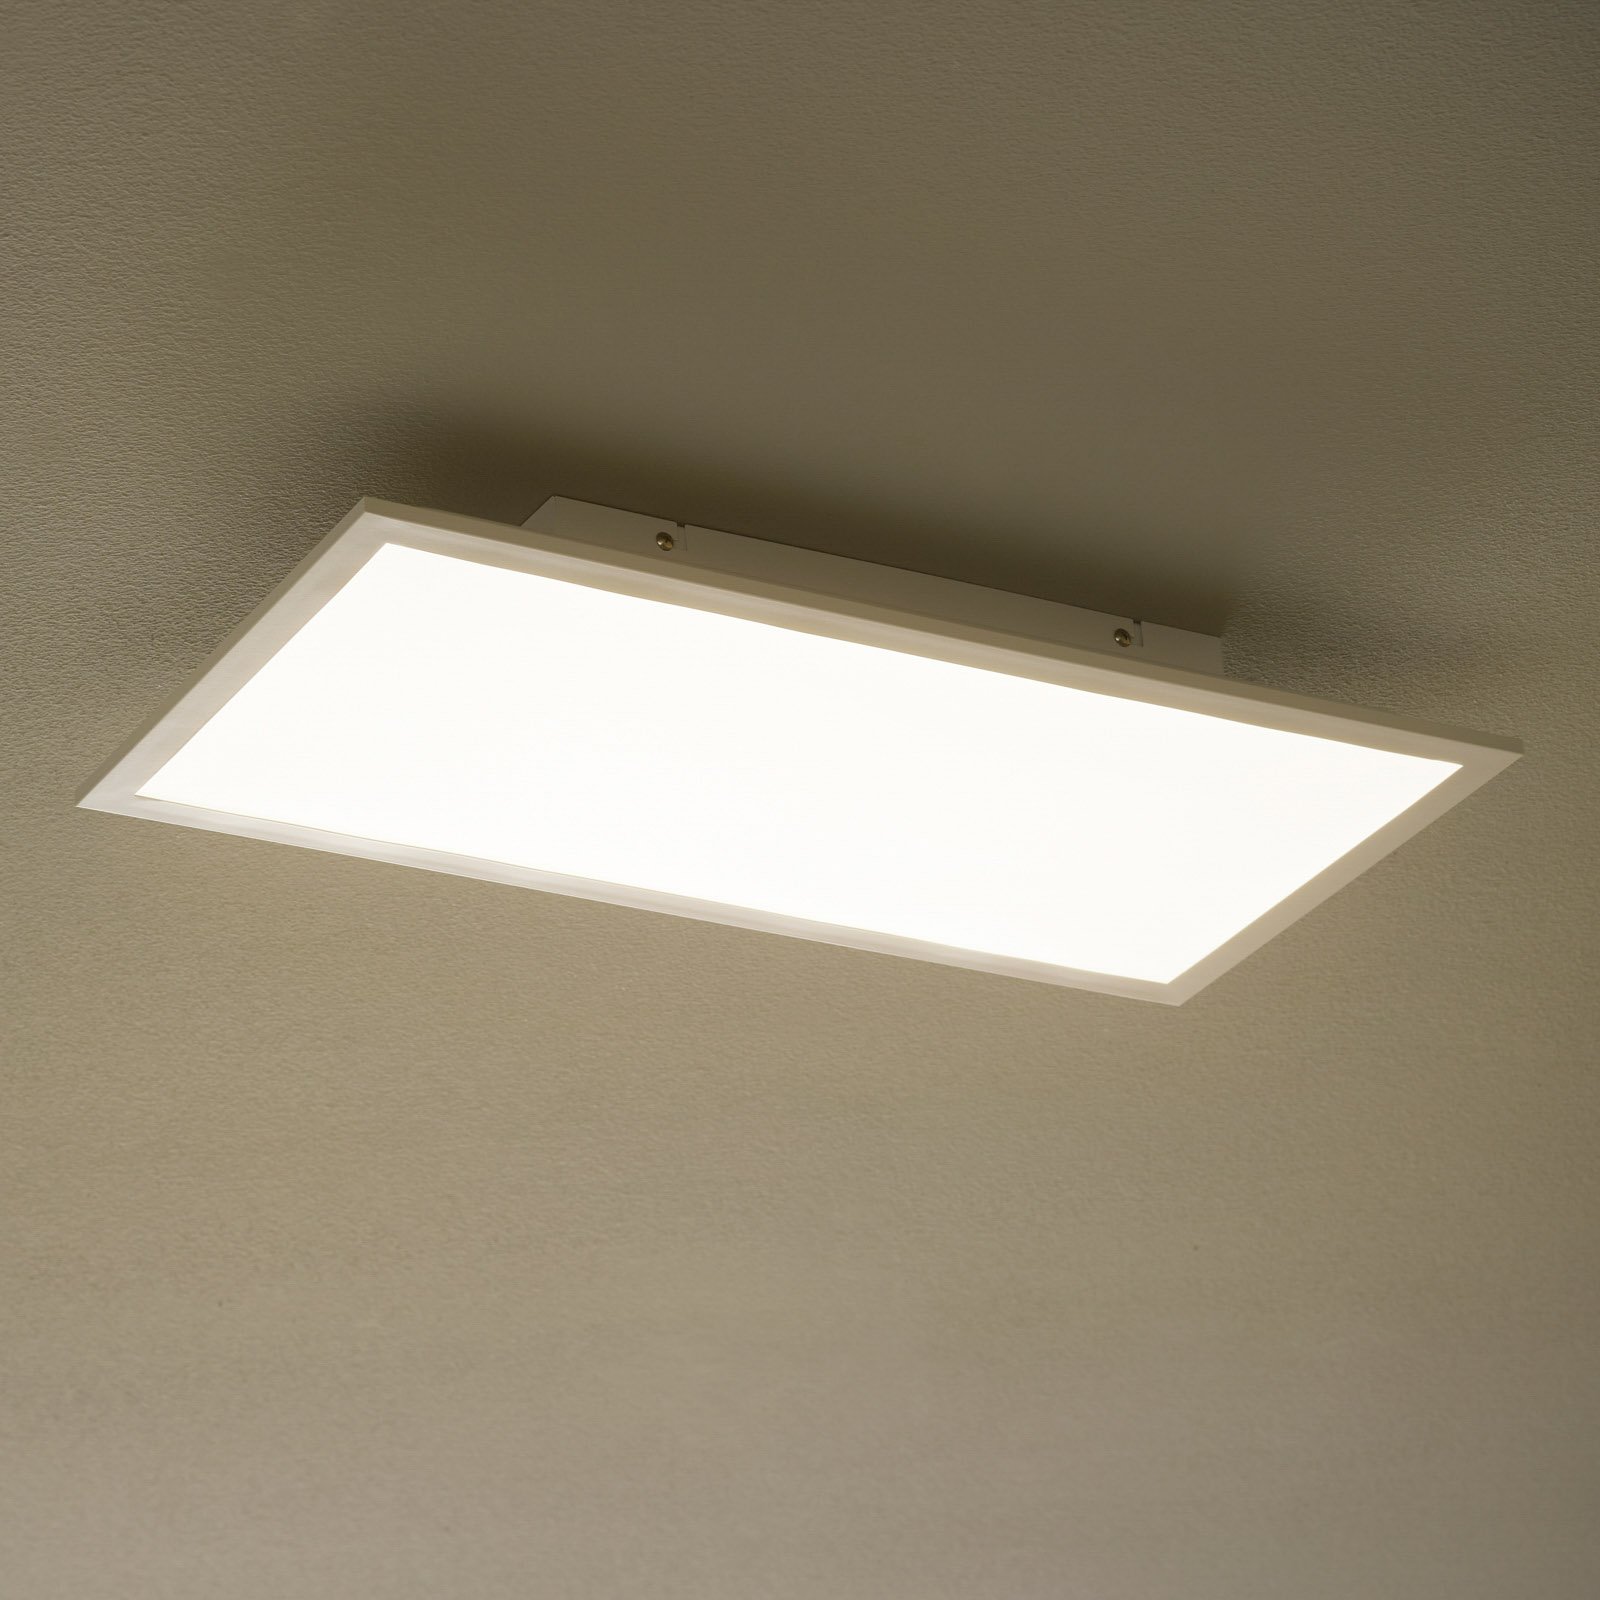 LED plafondlamp Fleet met bewegingsmelder 60x30 cm